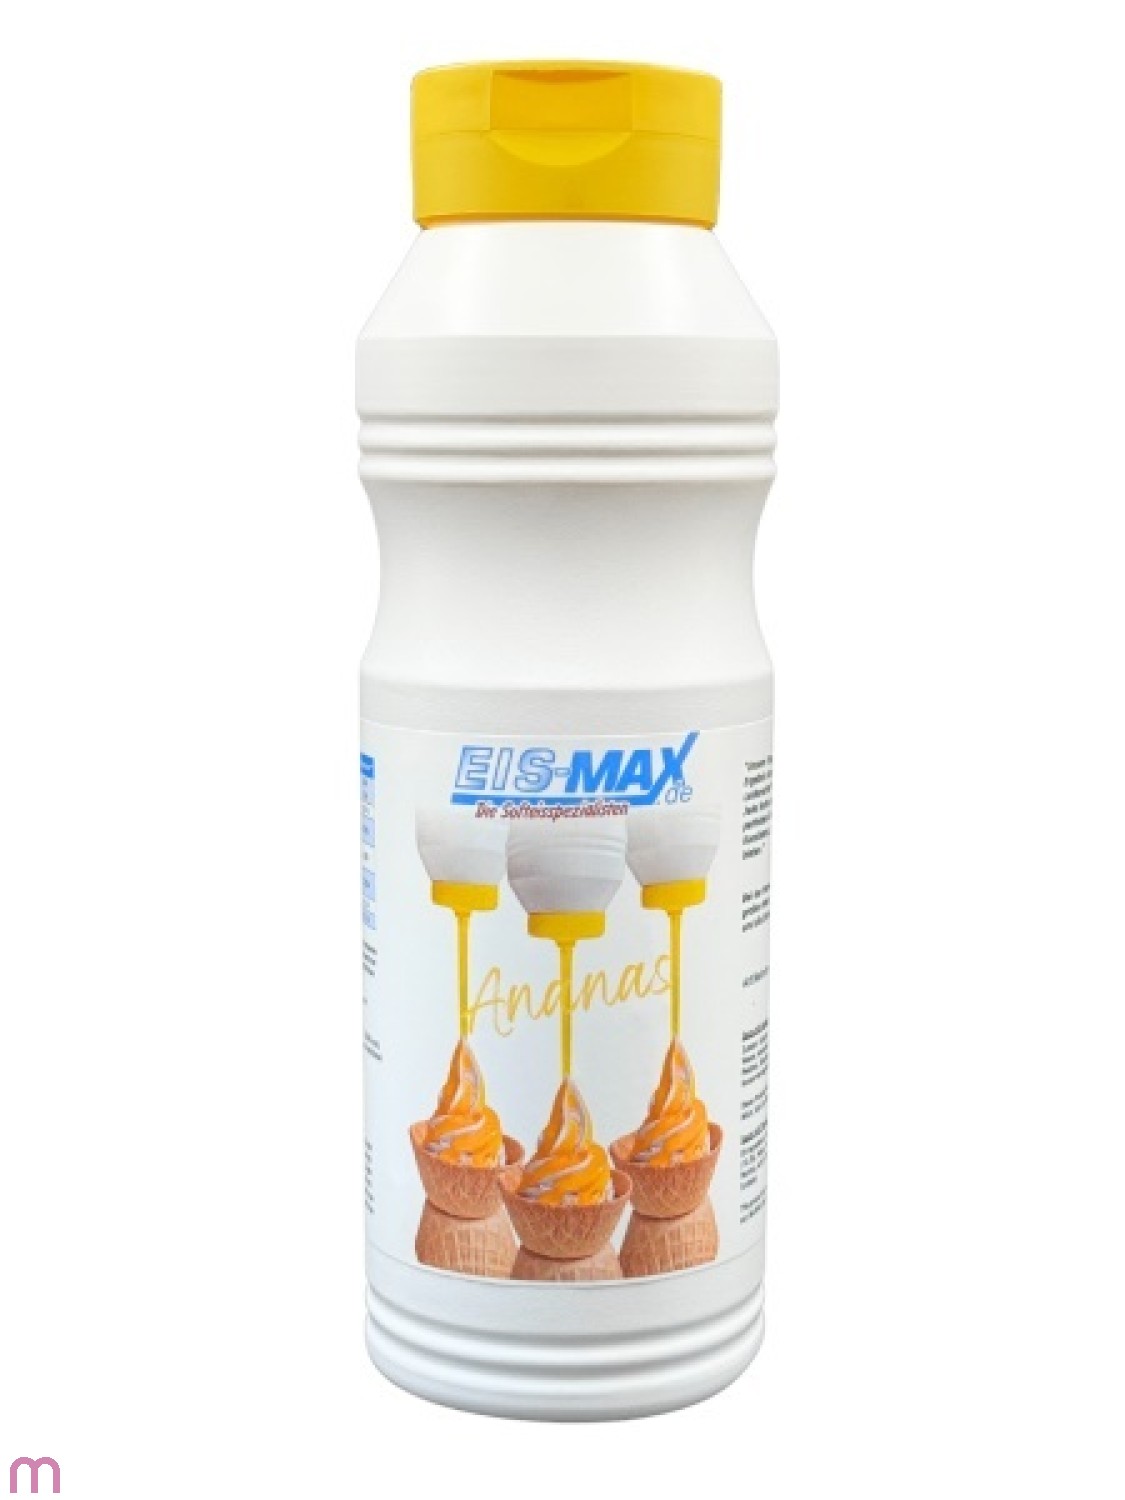 Eismax Ananas Topping 1 Kg Quetschflasche